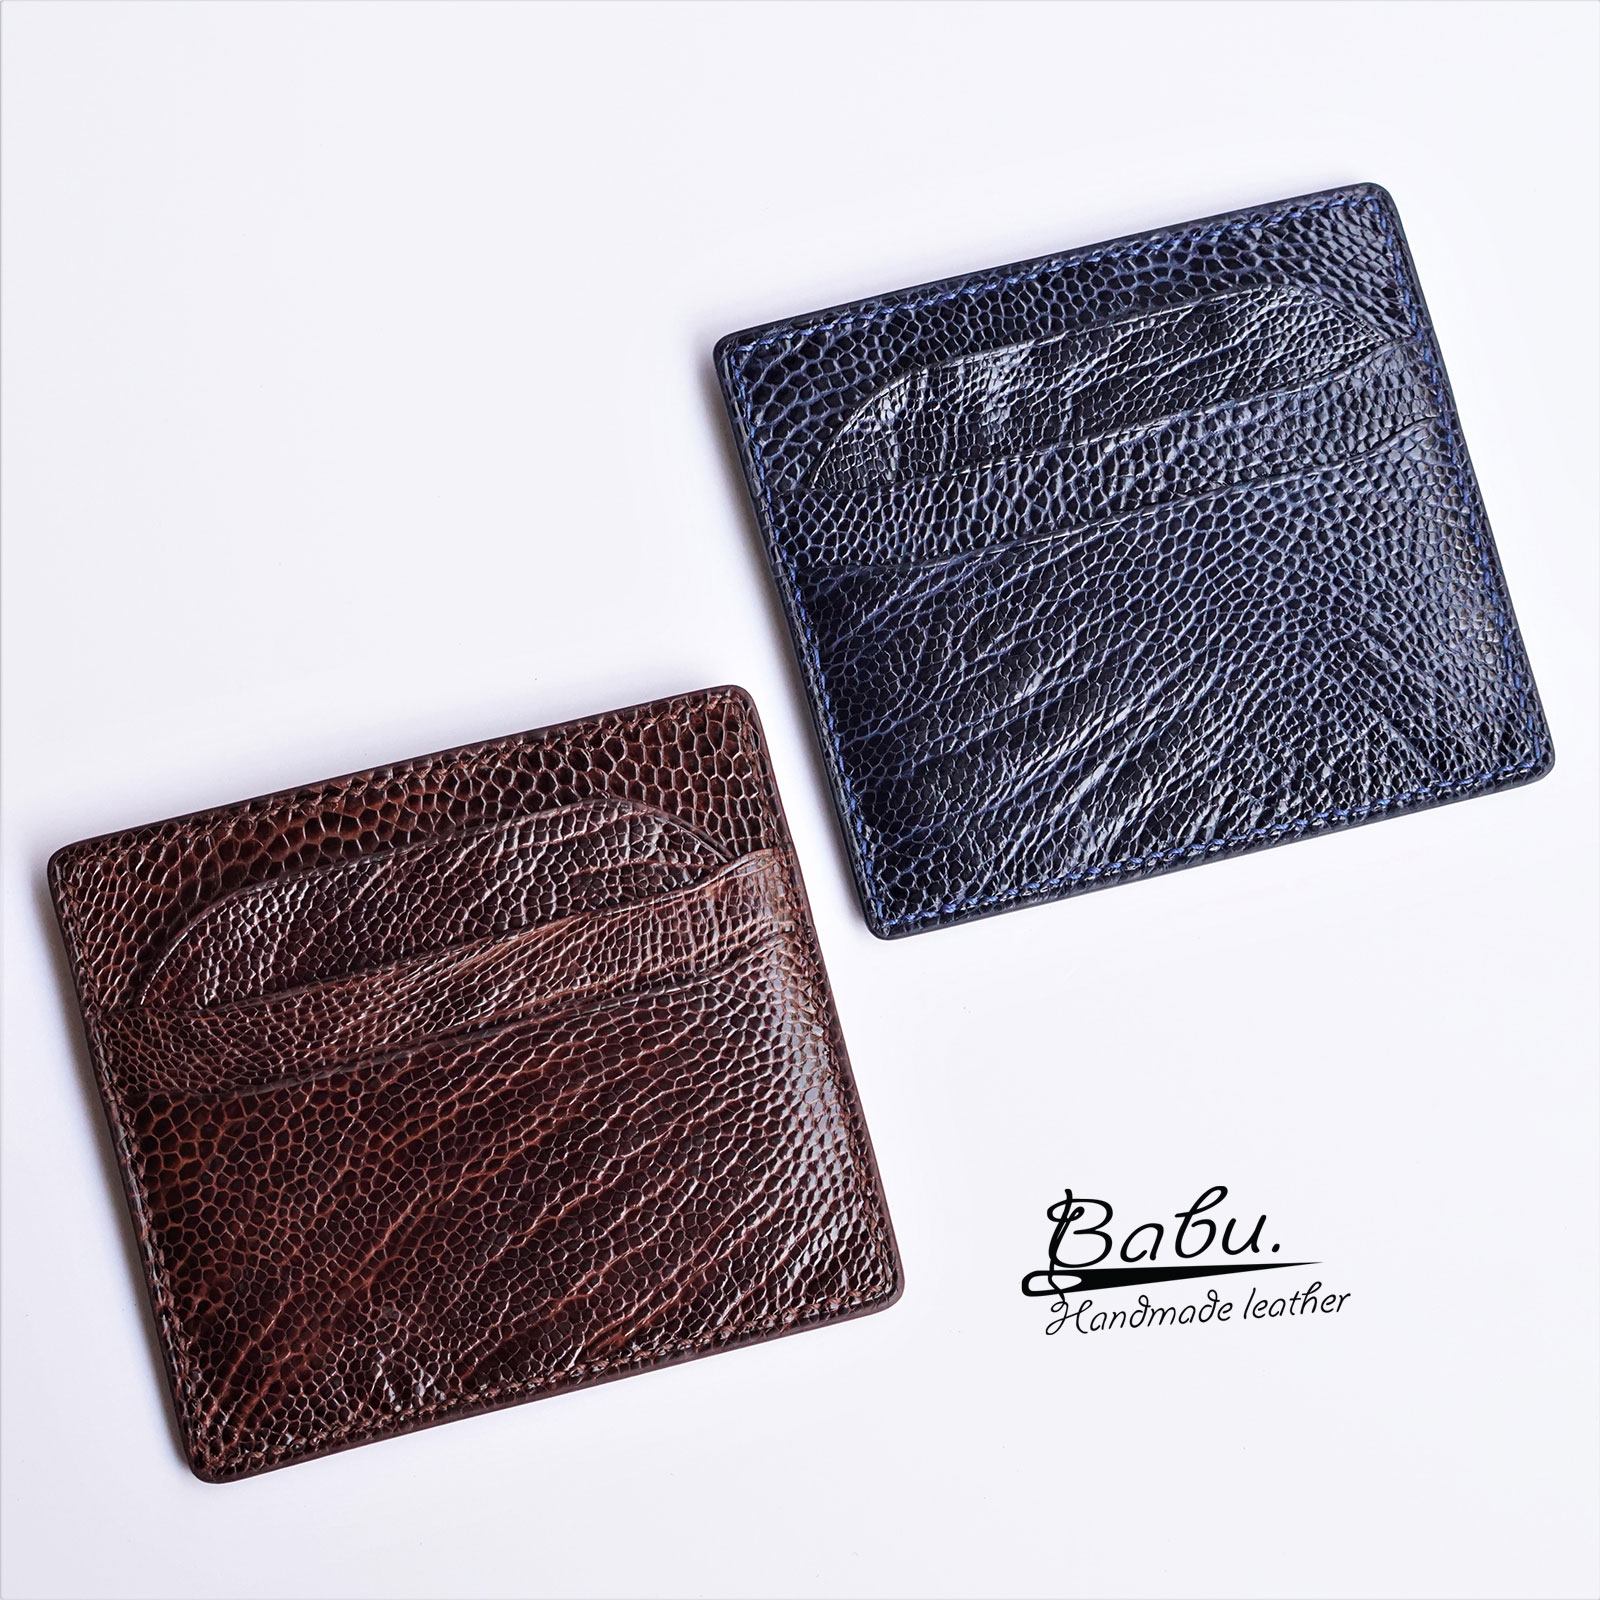 Sole Survivor Artisans Ostrich Leather Wallet